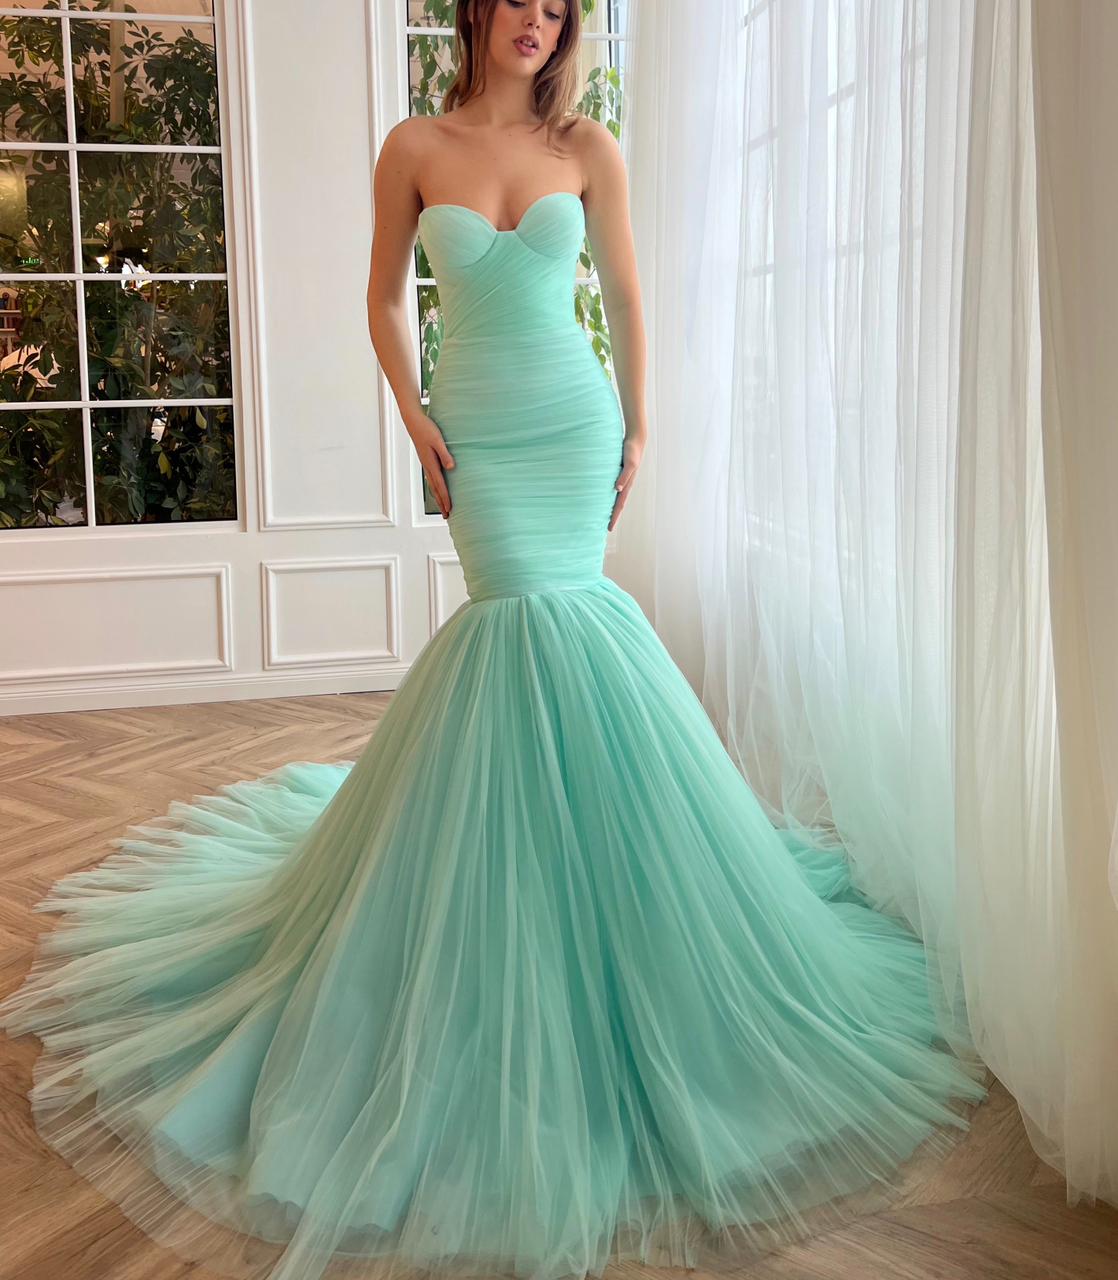 mermaid style dress